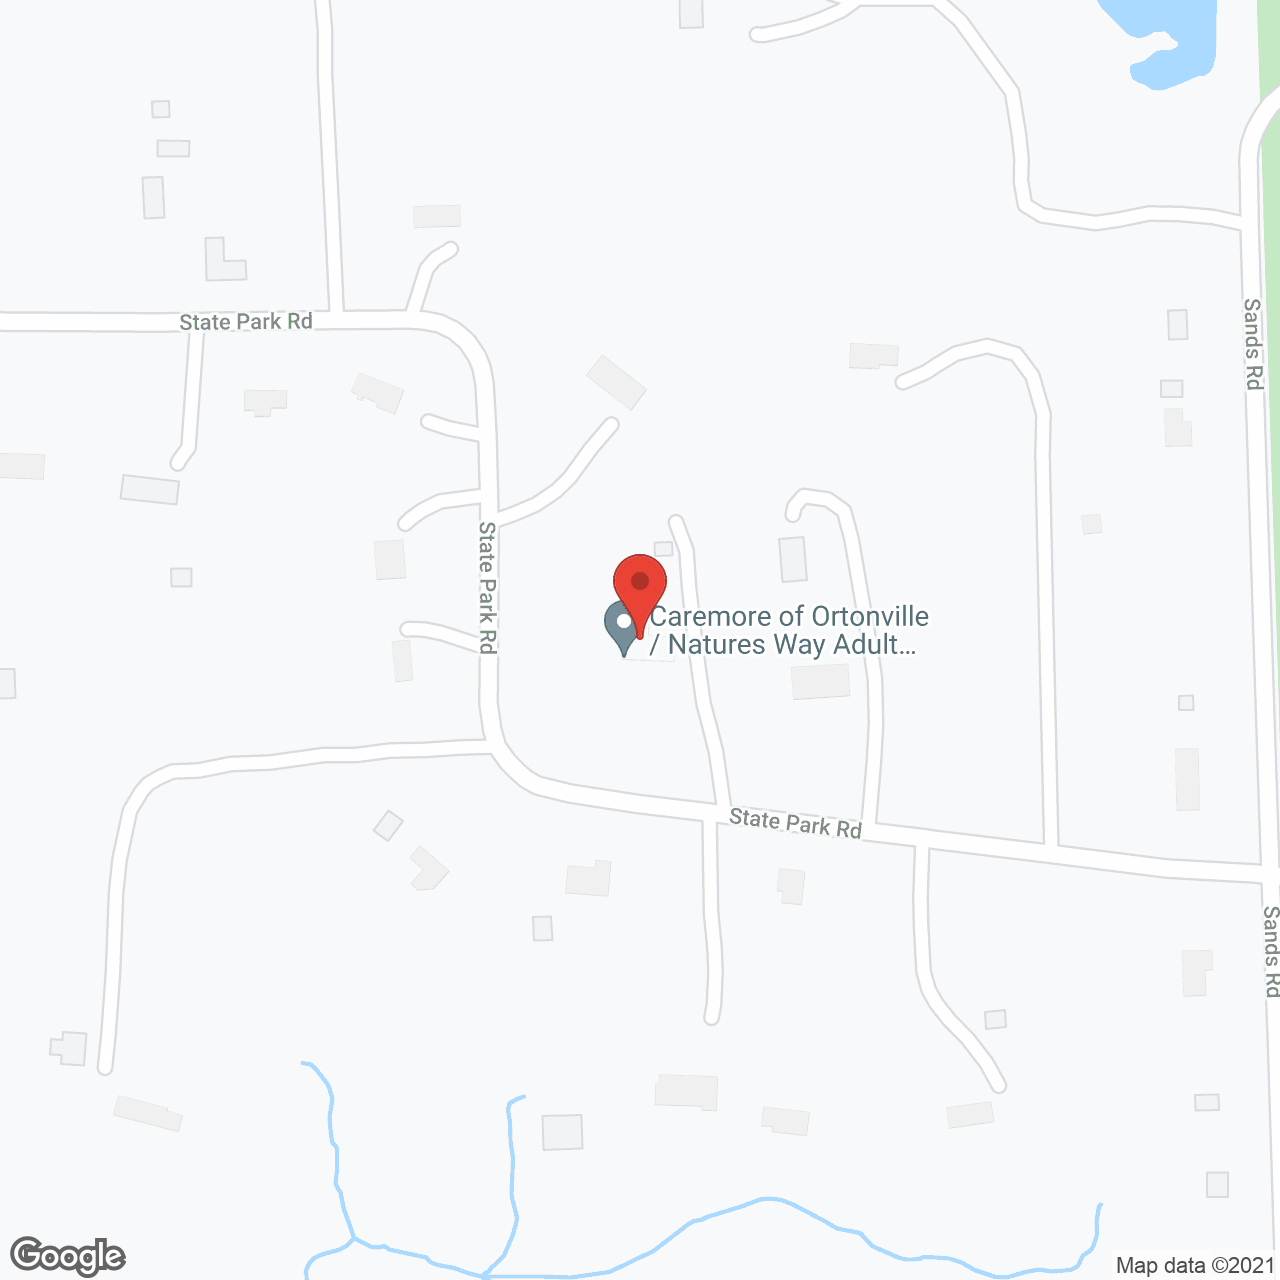 Caremore of Ortonville in google map